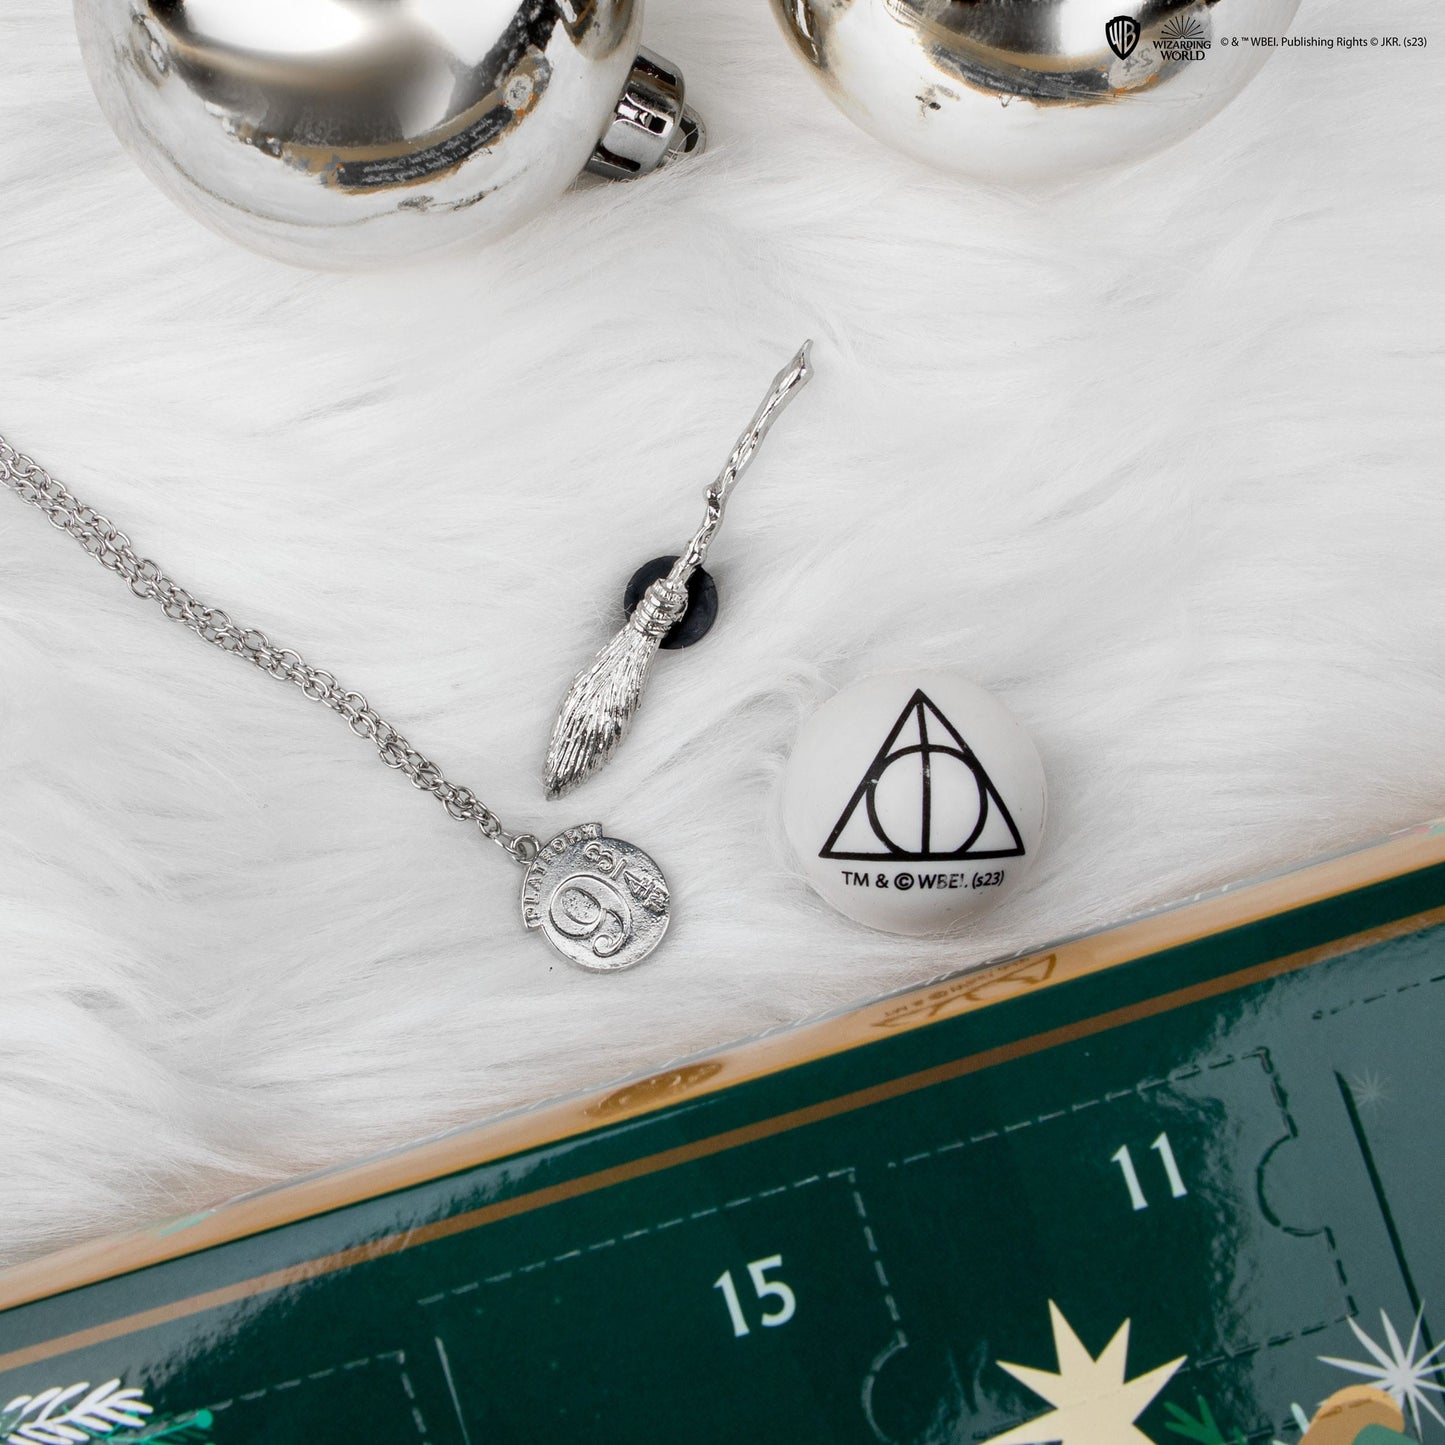 Harry Potter Adventskalender – Klassiker der Zauberwelt 